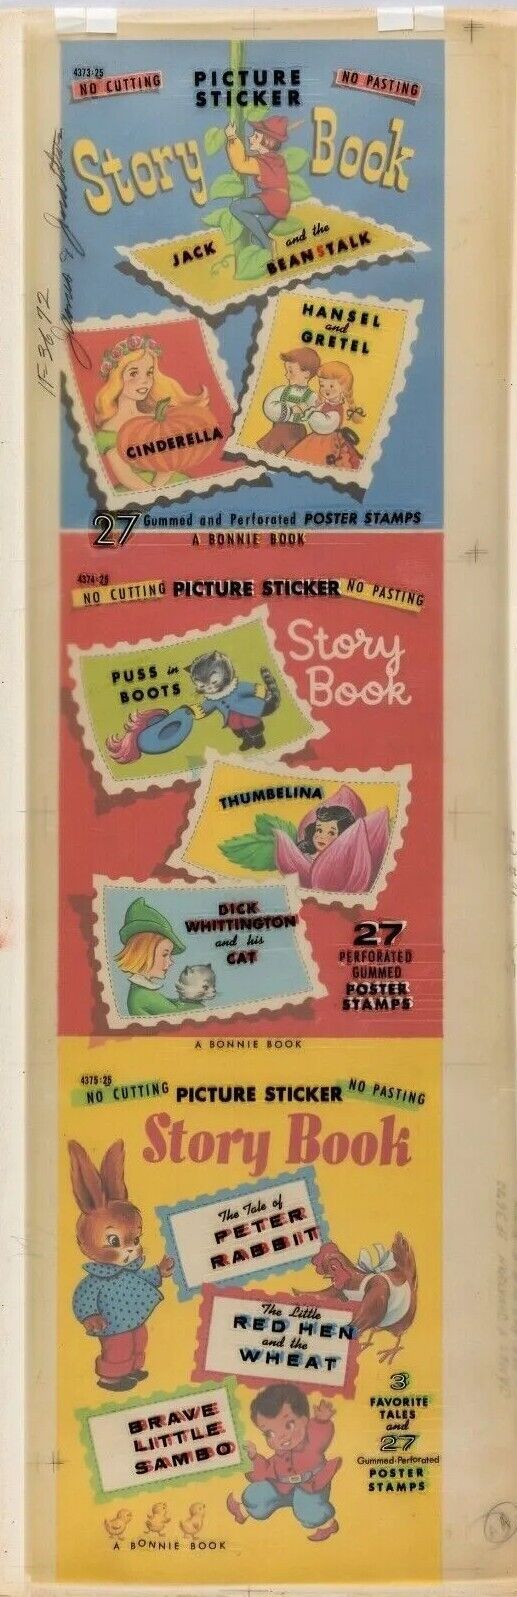 1955 Original Children Book Cover Art Story Stamp Sambo Cinderella Puss In Boots